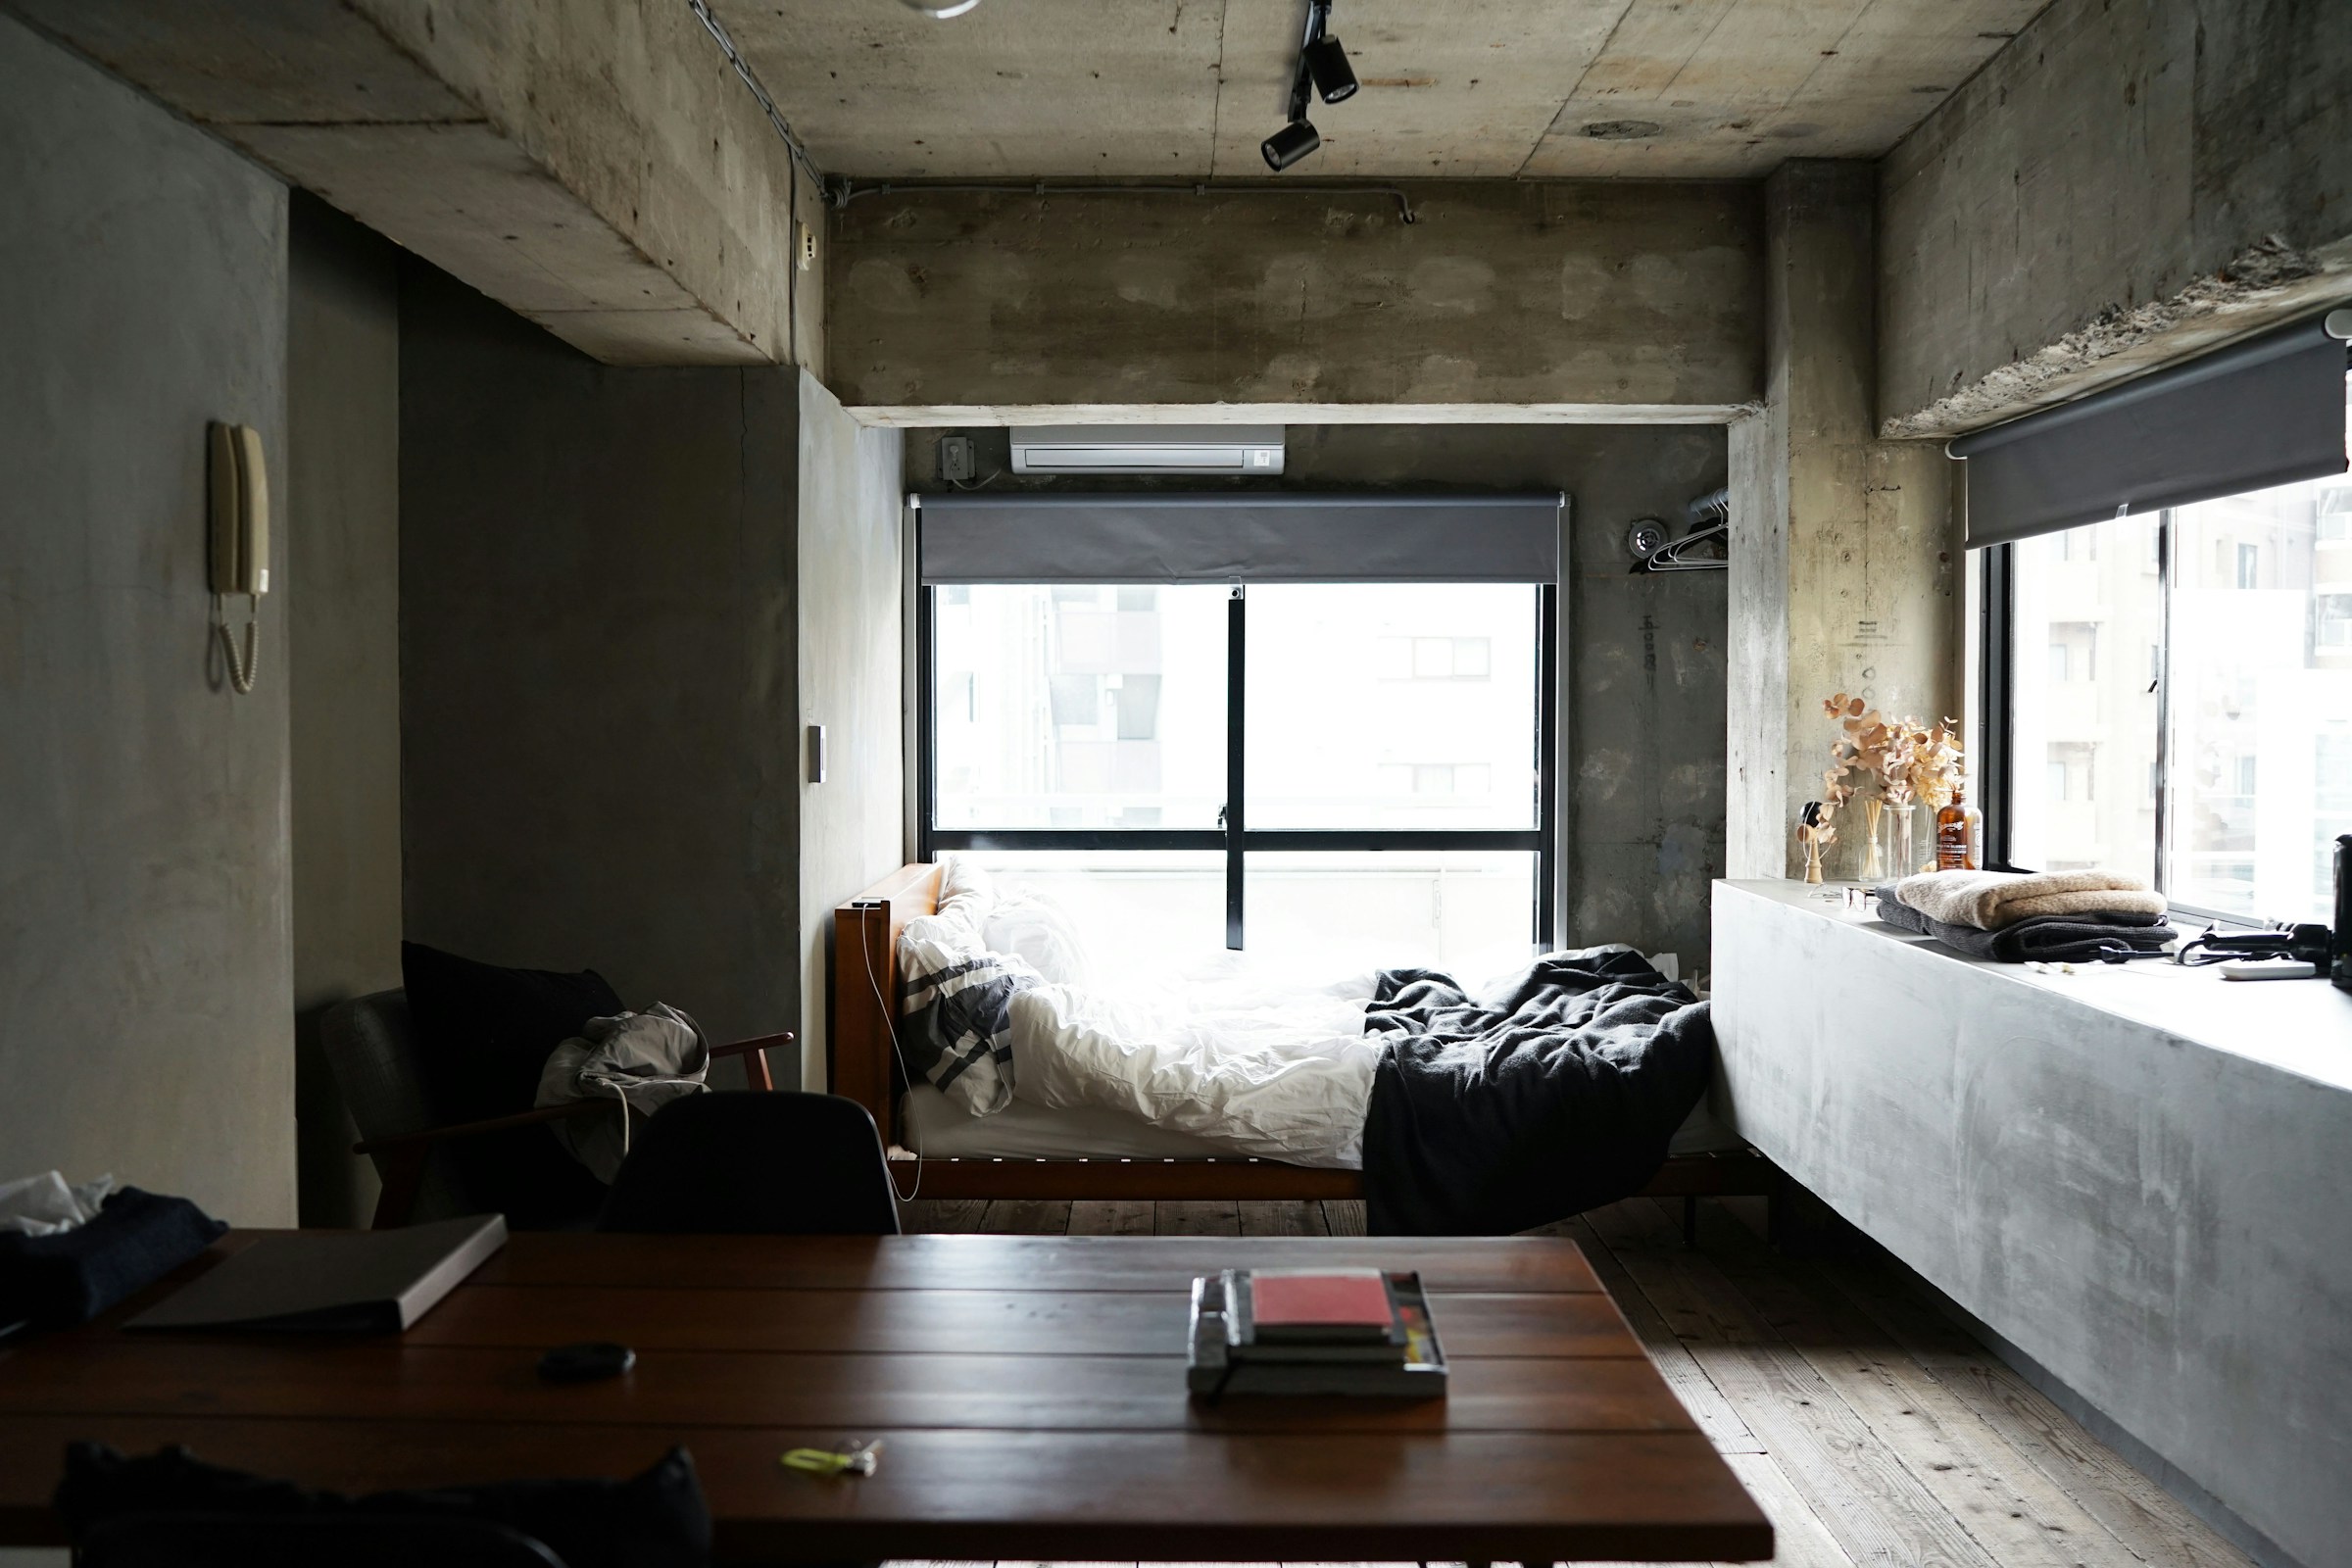 A small apartment | Source: Unsplash